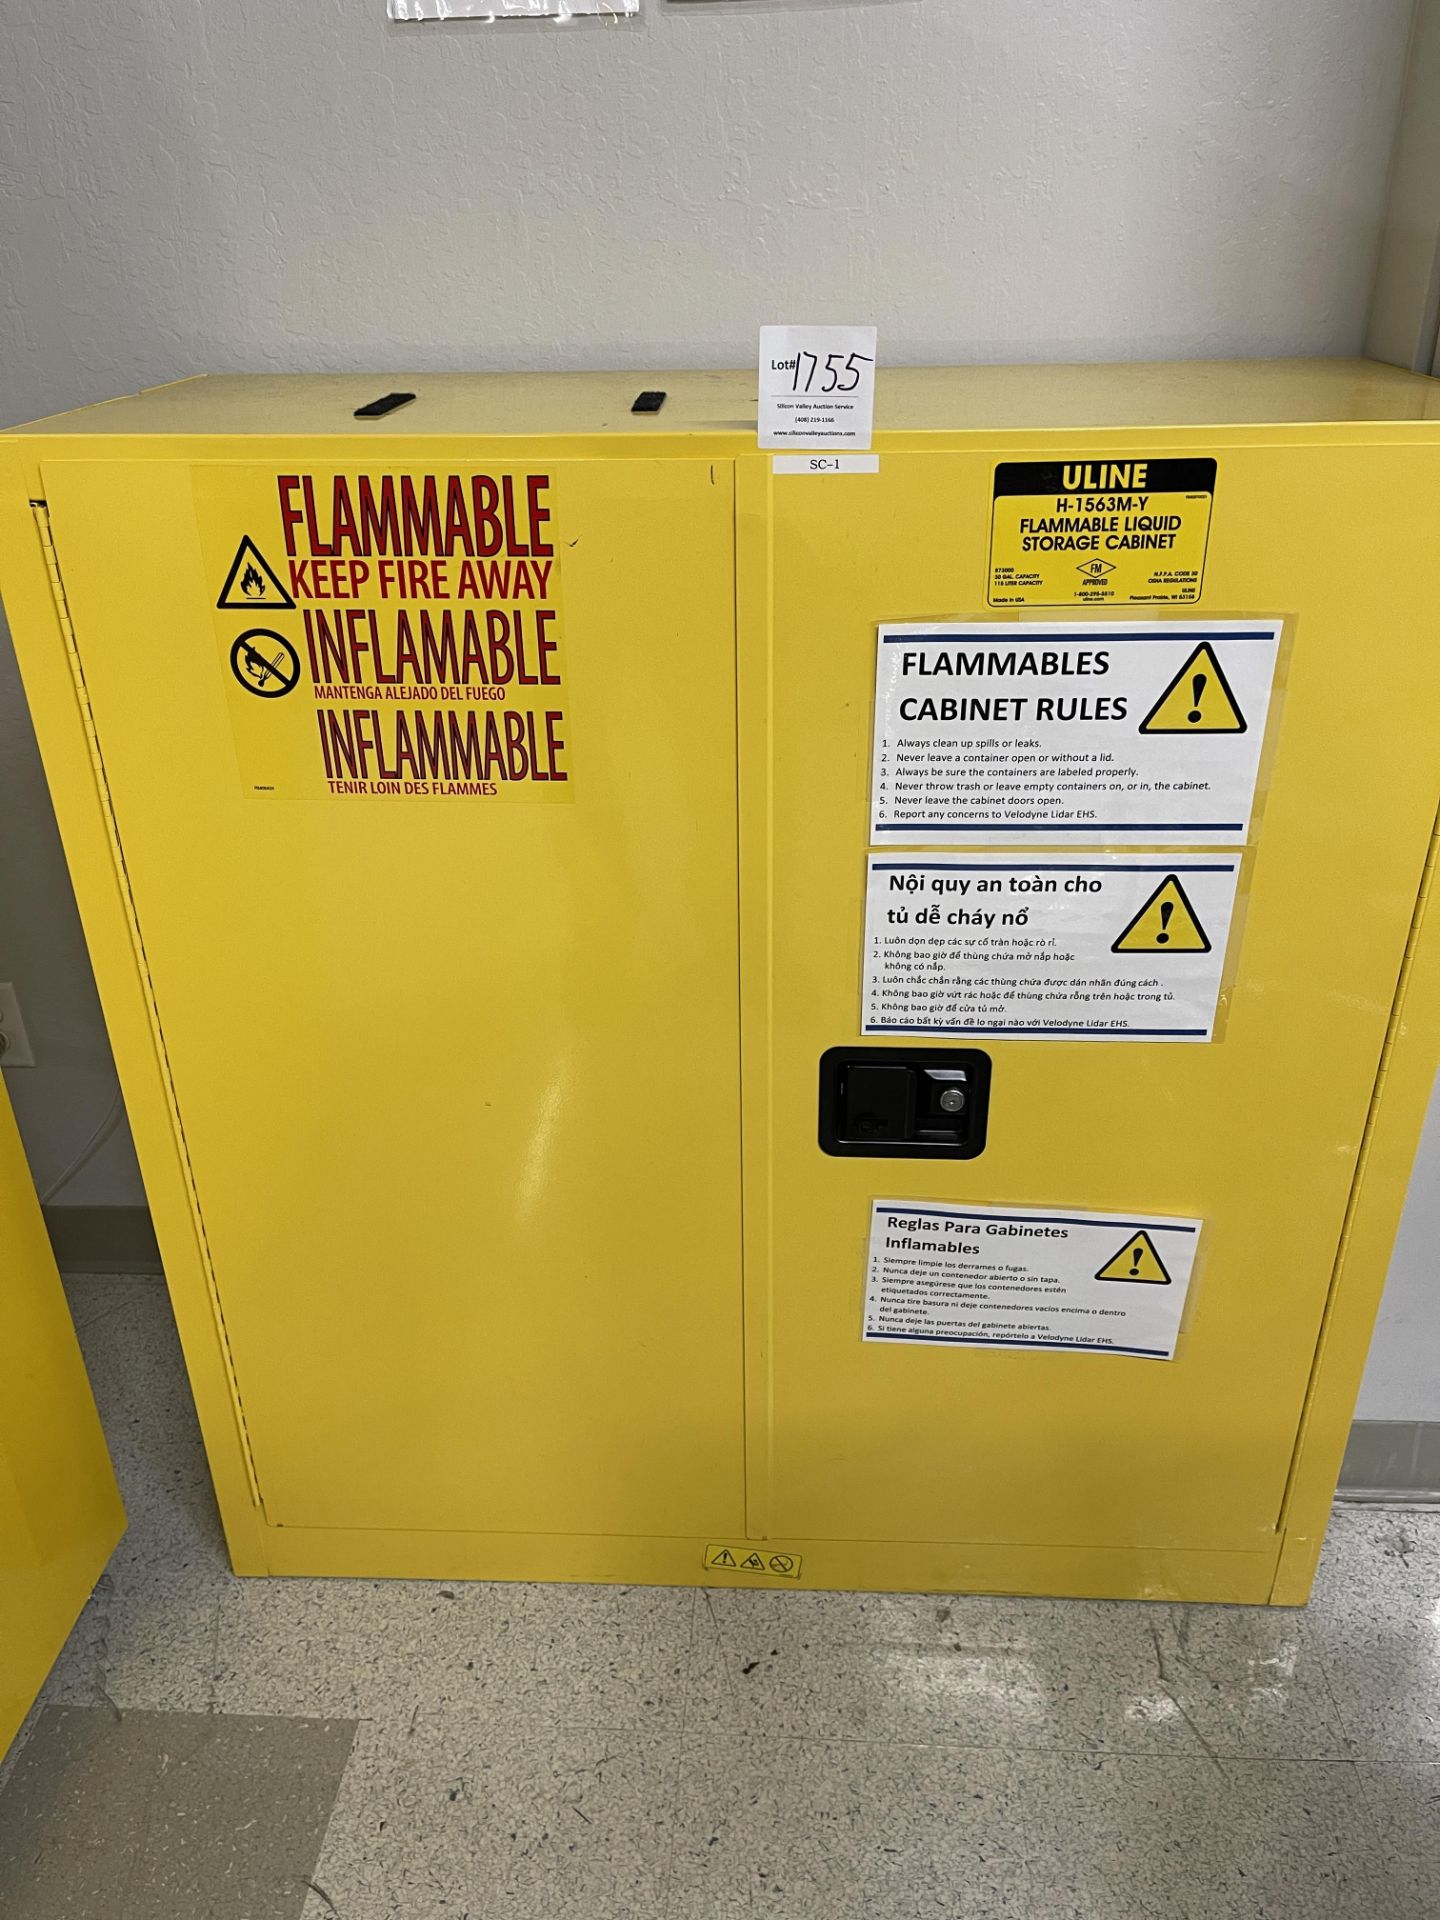 Uline H-1563M-Y Flammable Liquid Storage Cabinet 43" wide x 18" deep x 44" high